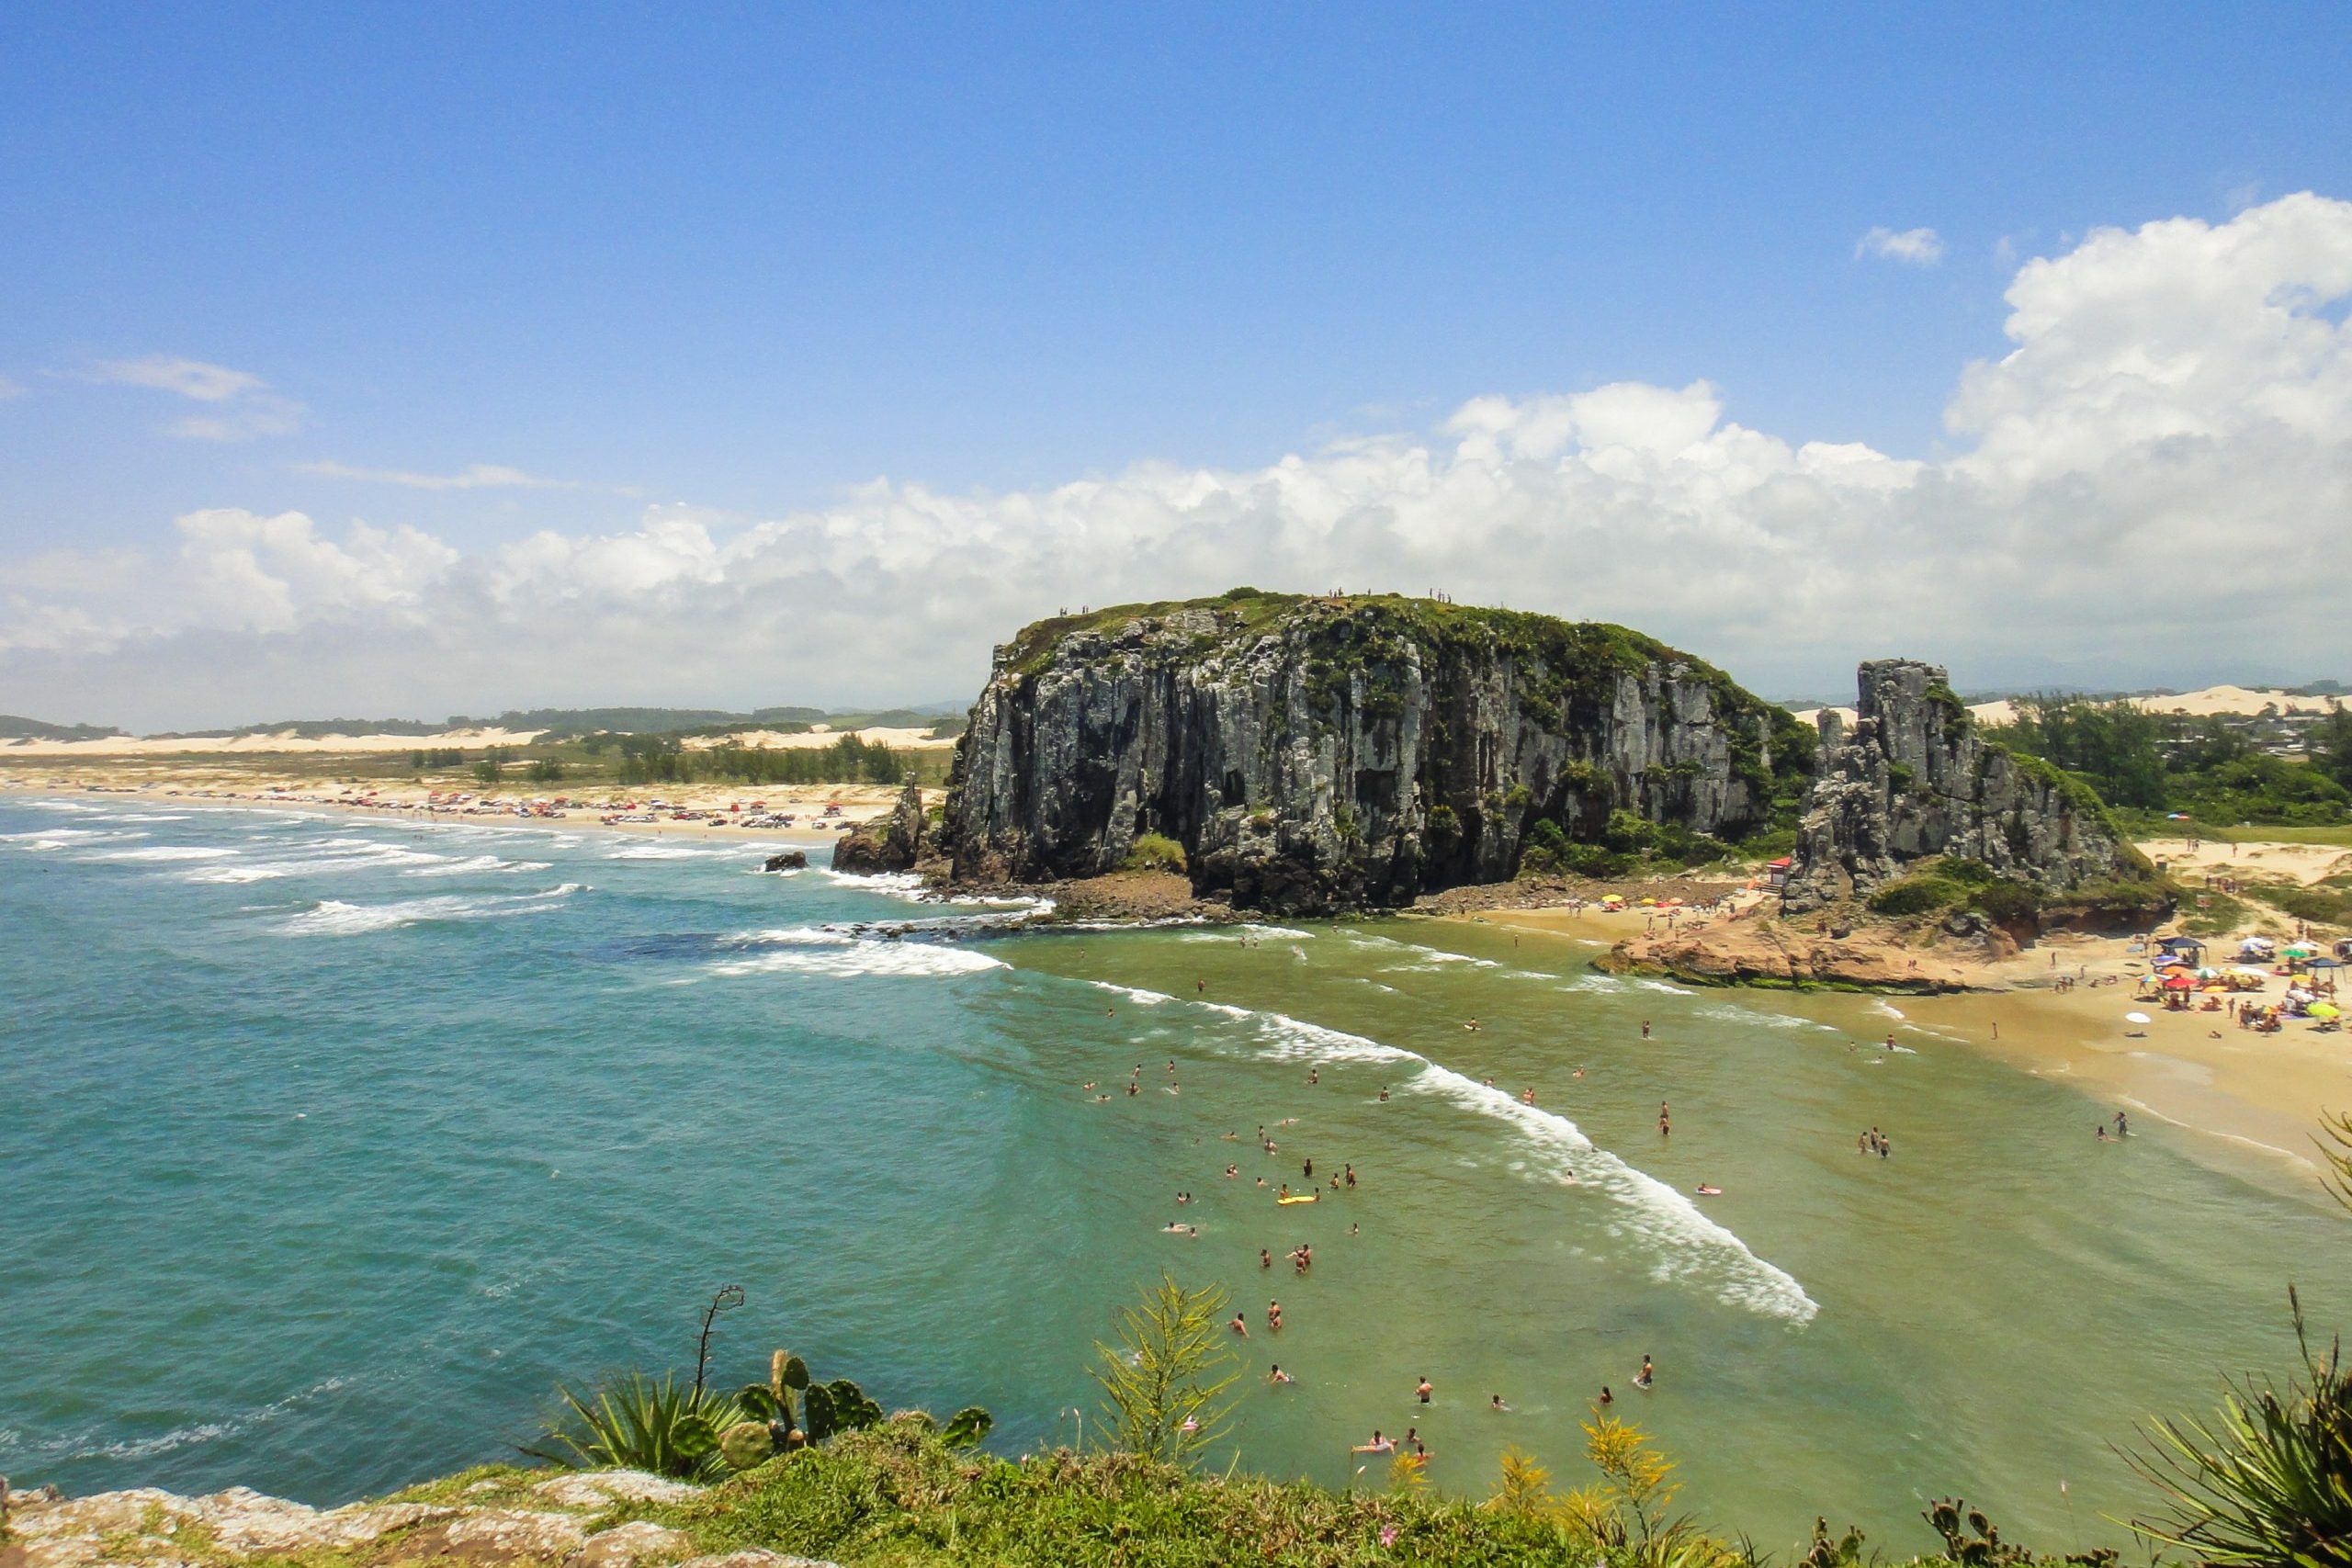 Praia da Guarita, a beach in Torres - Rio Grande do Sul - Brazil